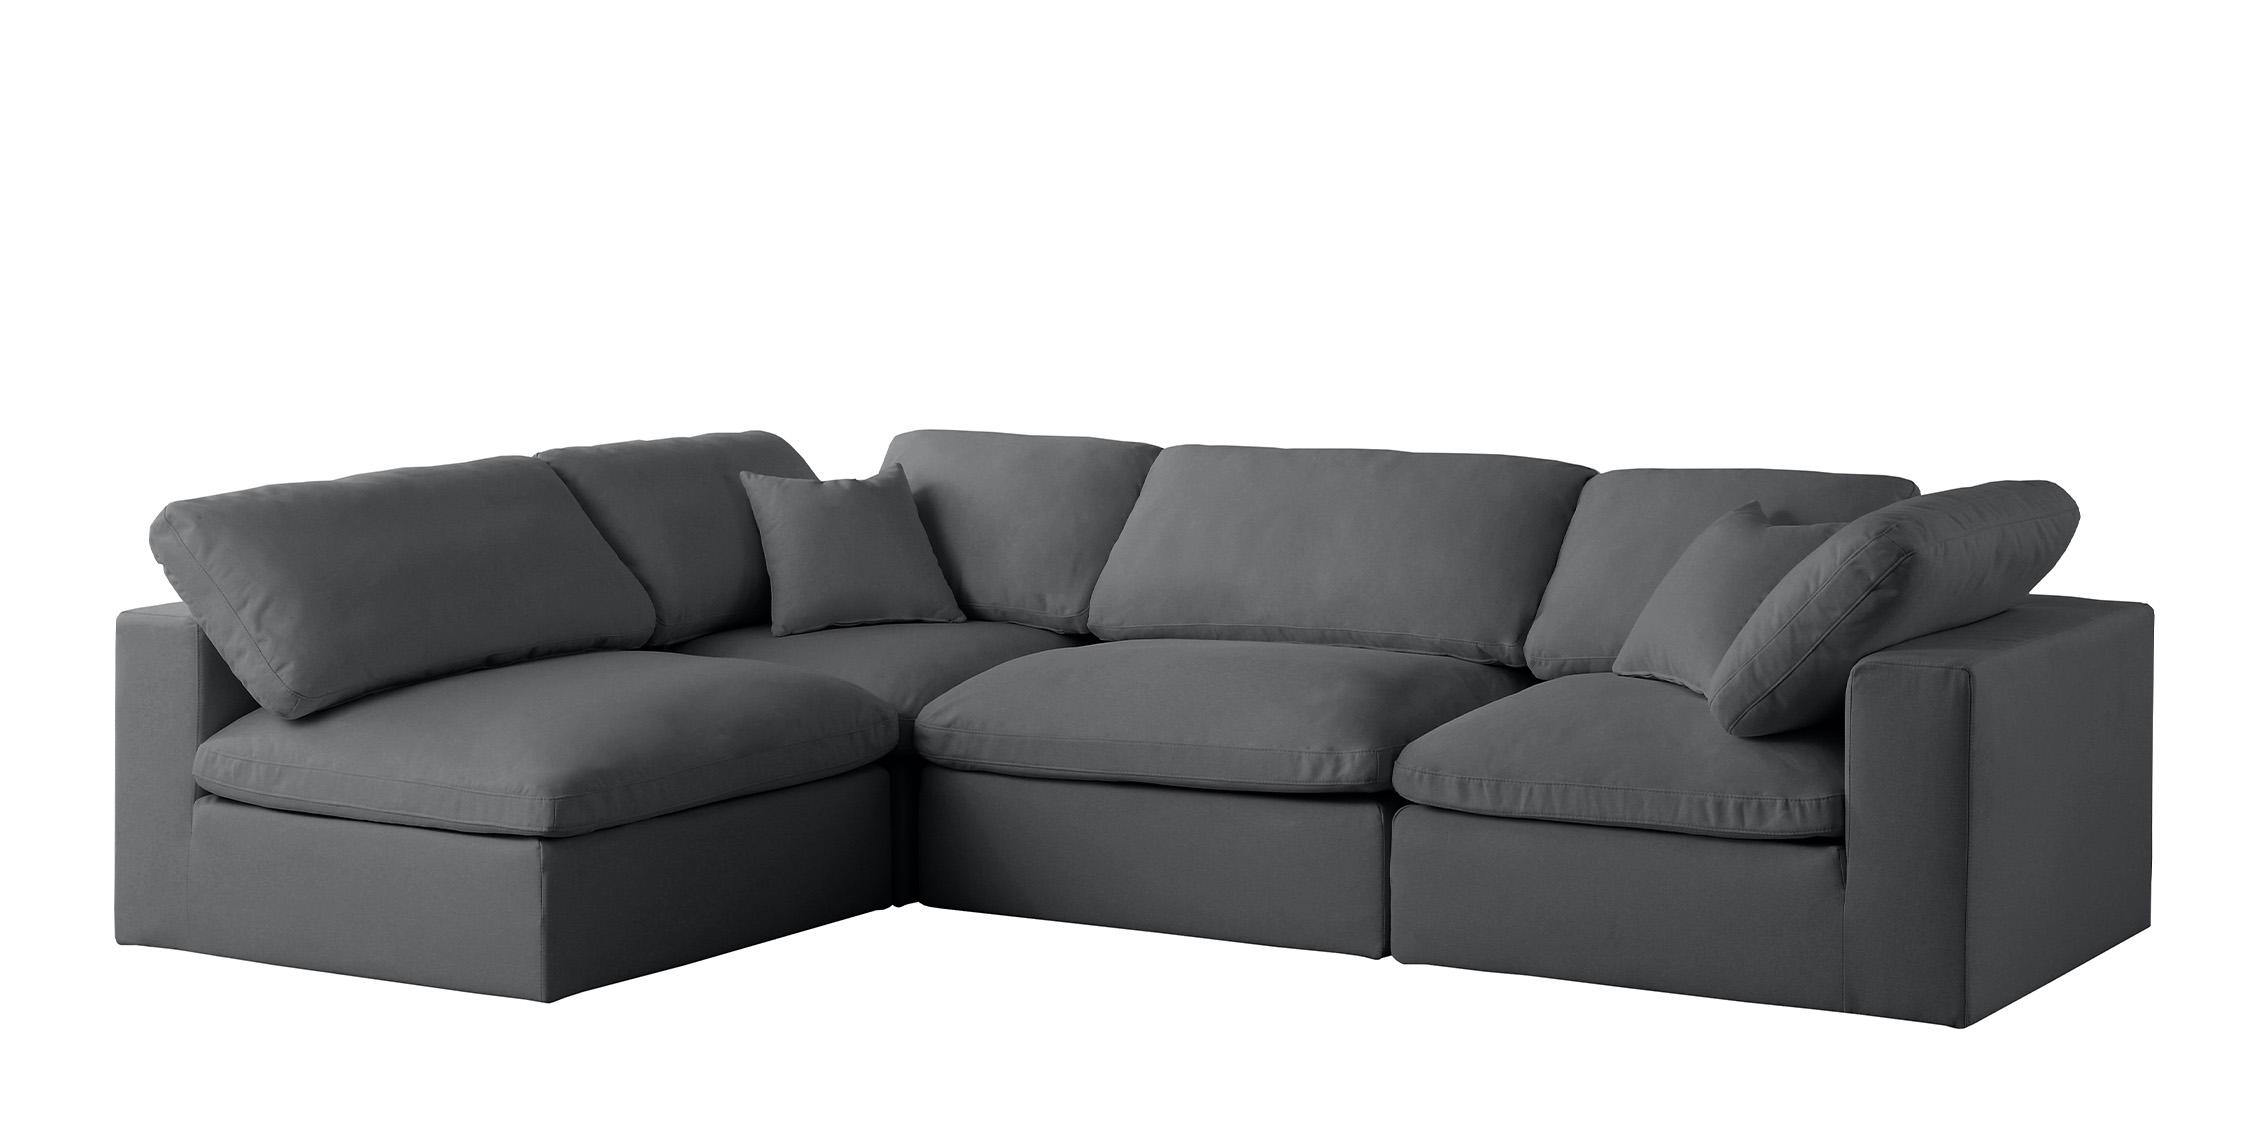 Contemporary, Modern Sectional Sofa 602Grey-Sec4B 602Grey-Sec4B in Gray Fabric